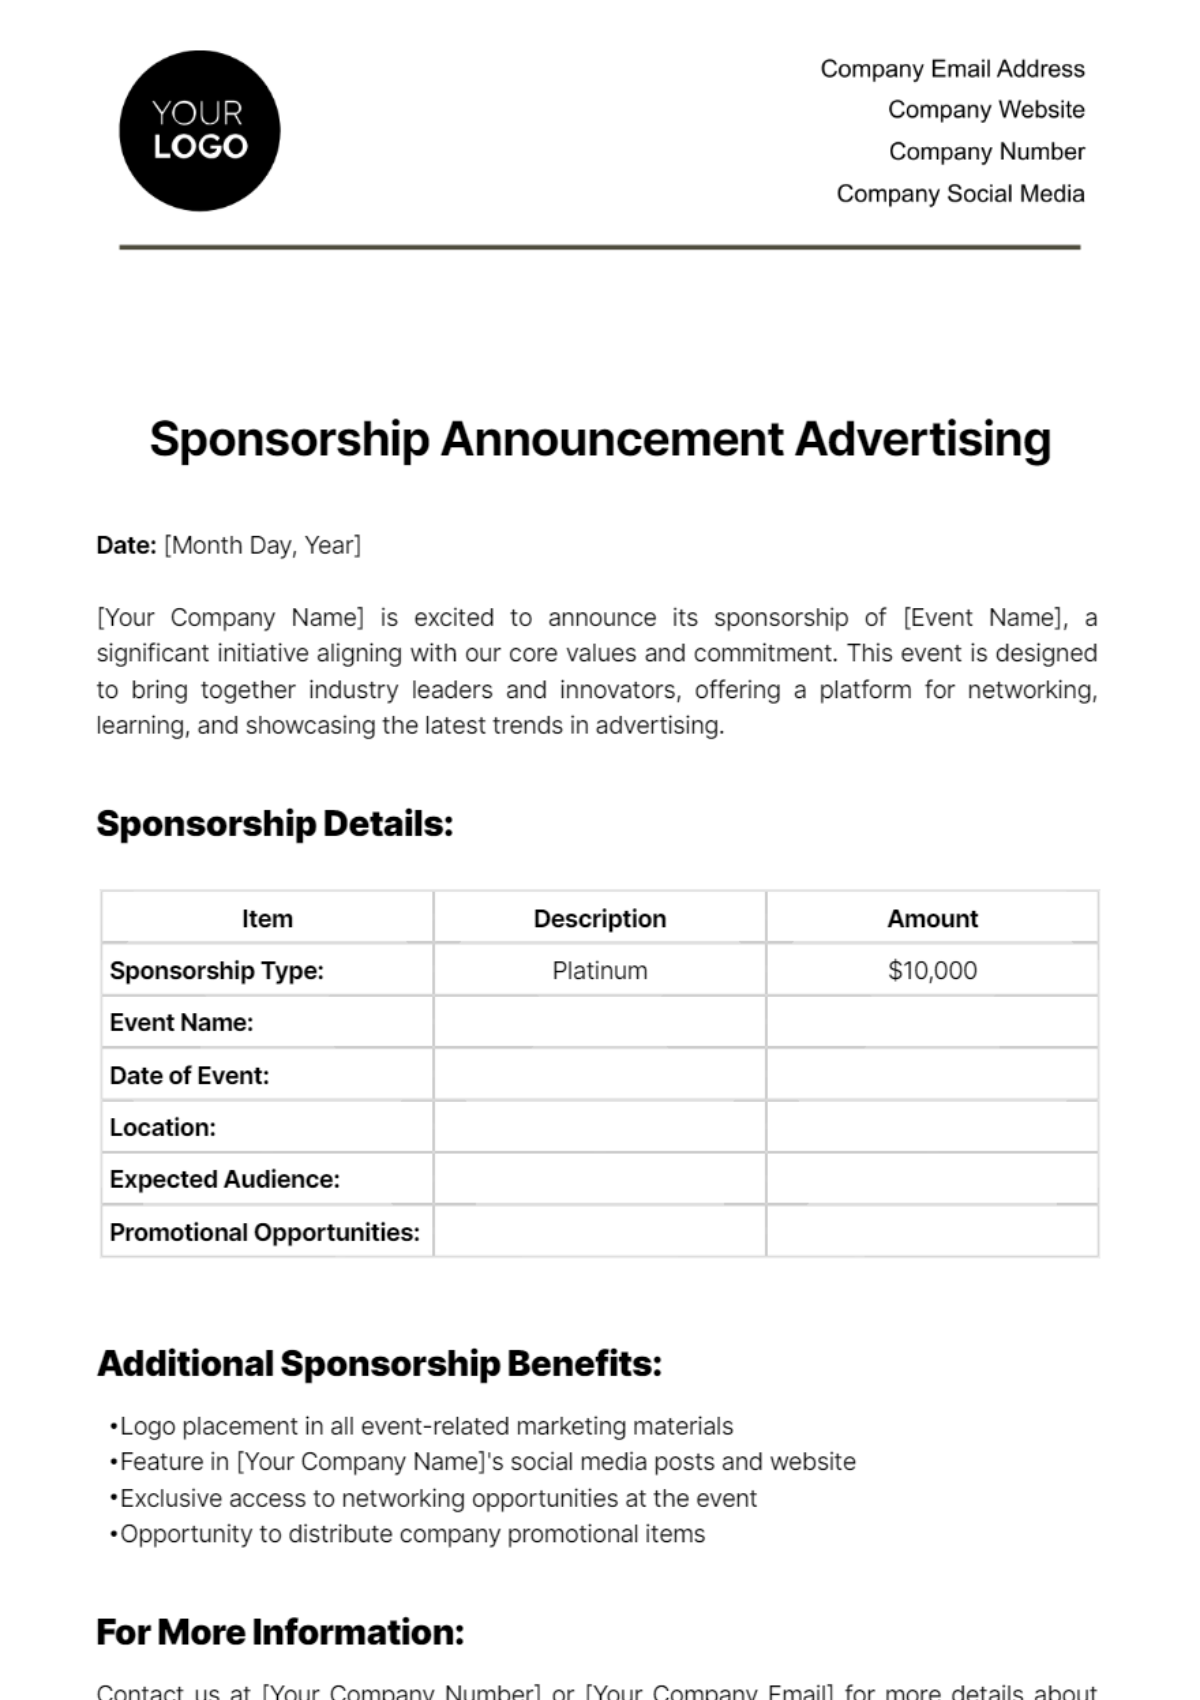 Sponsorship Announcement Advertising Template